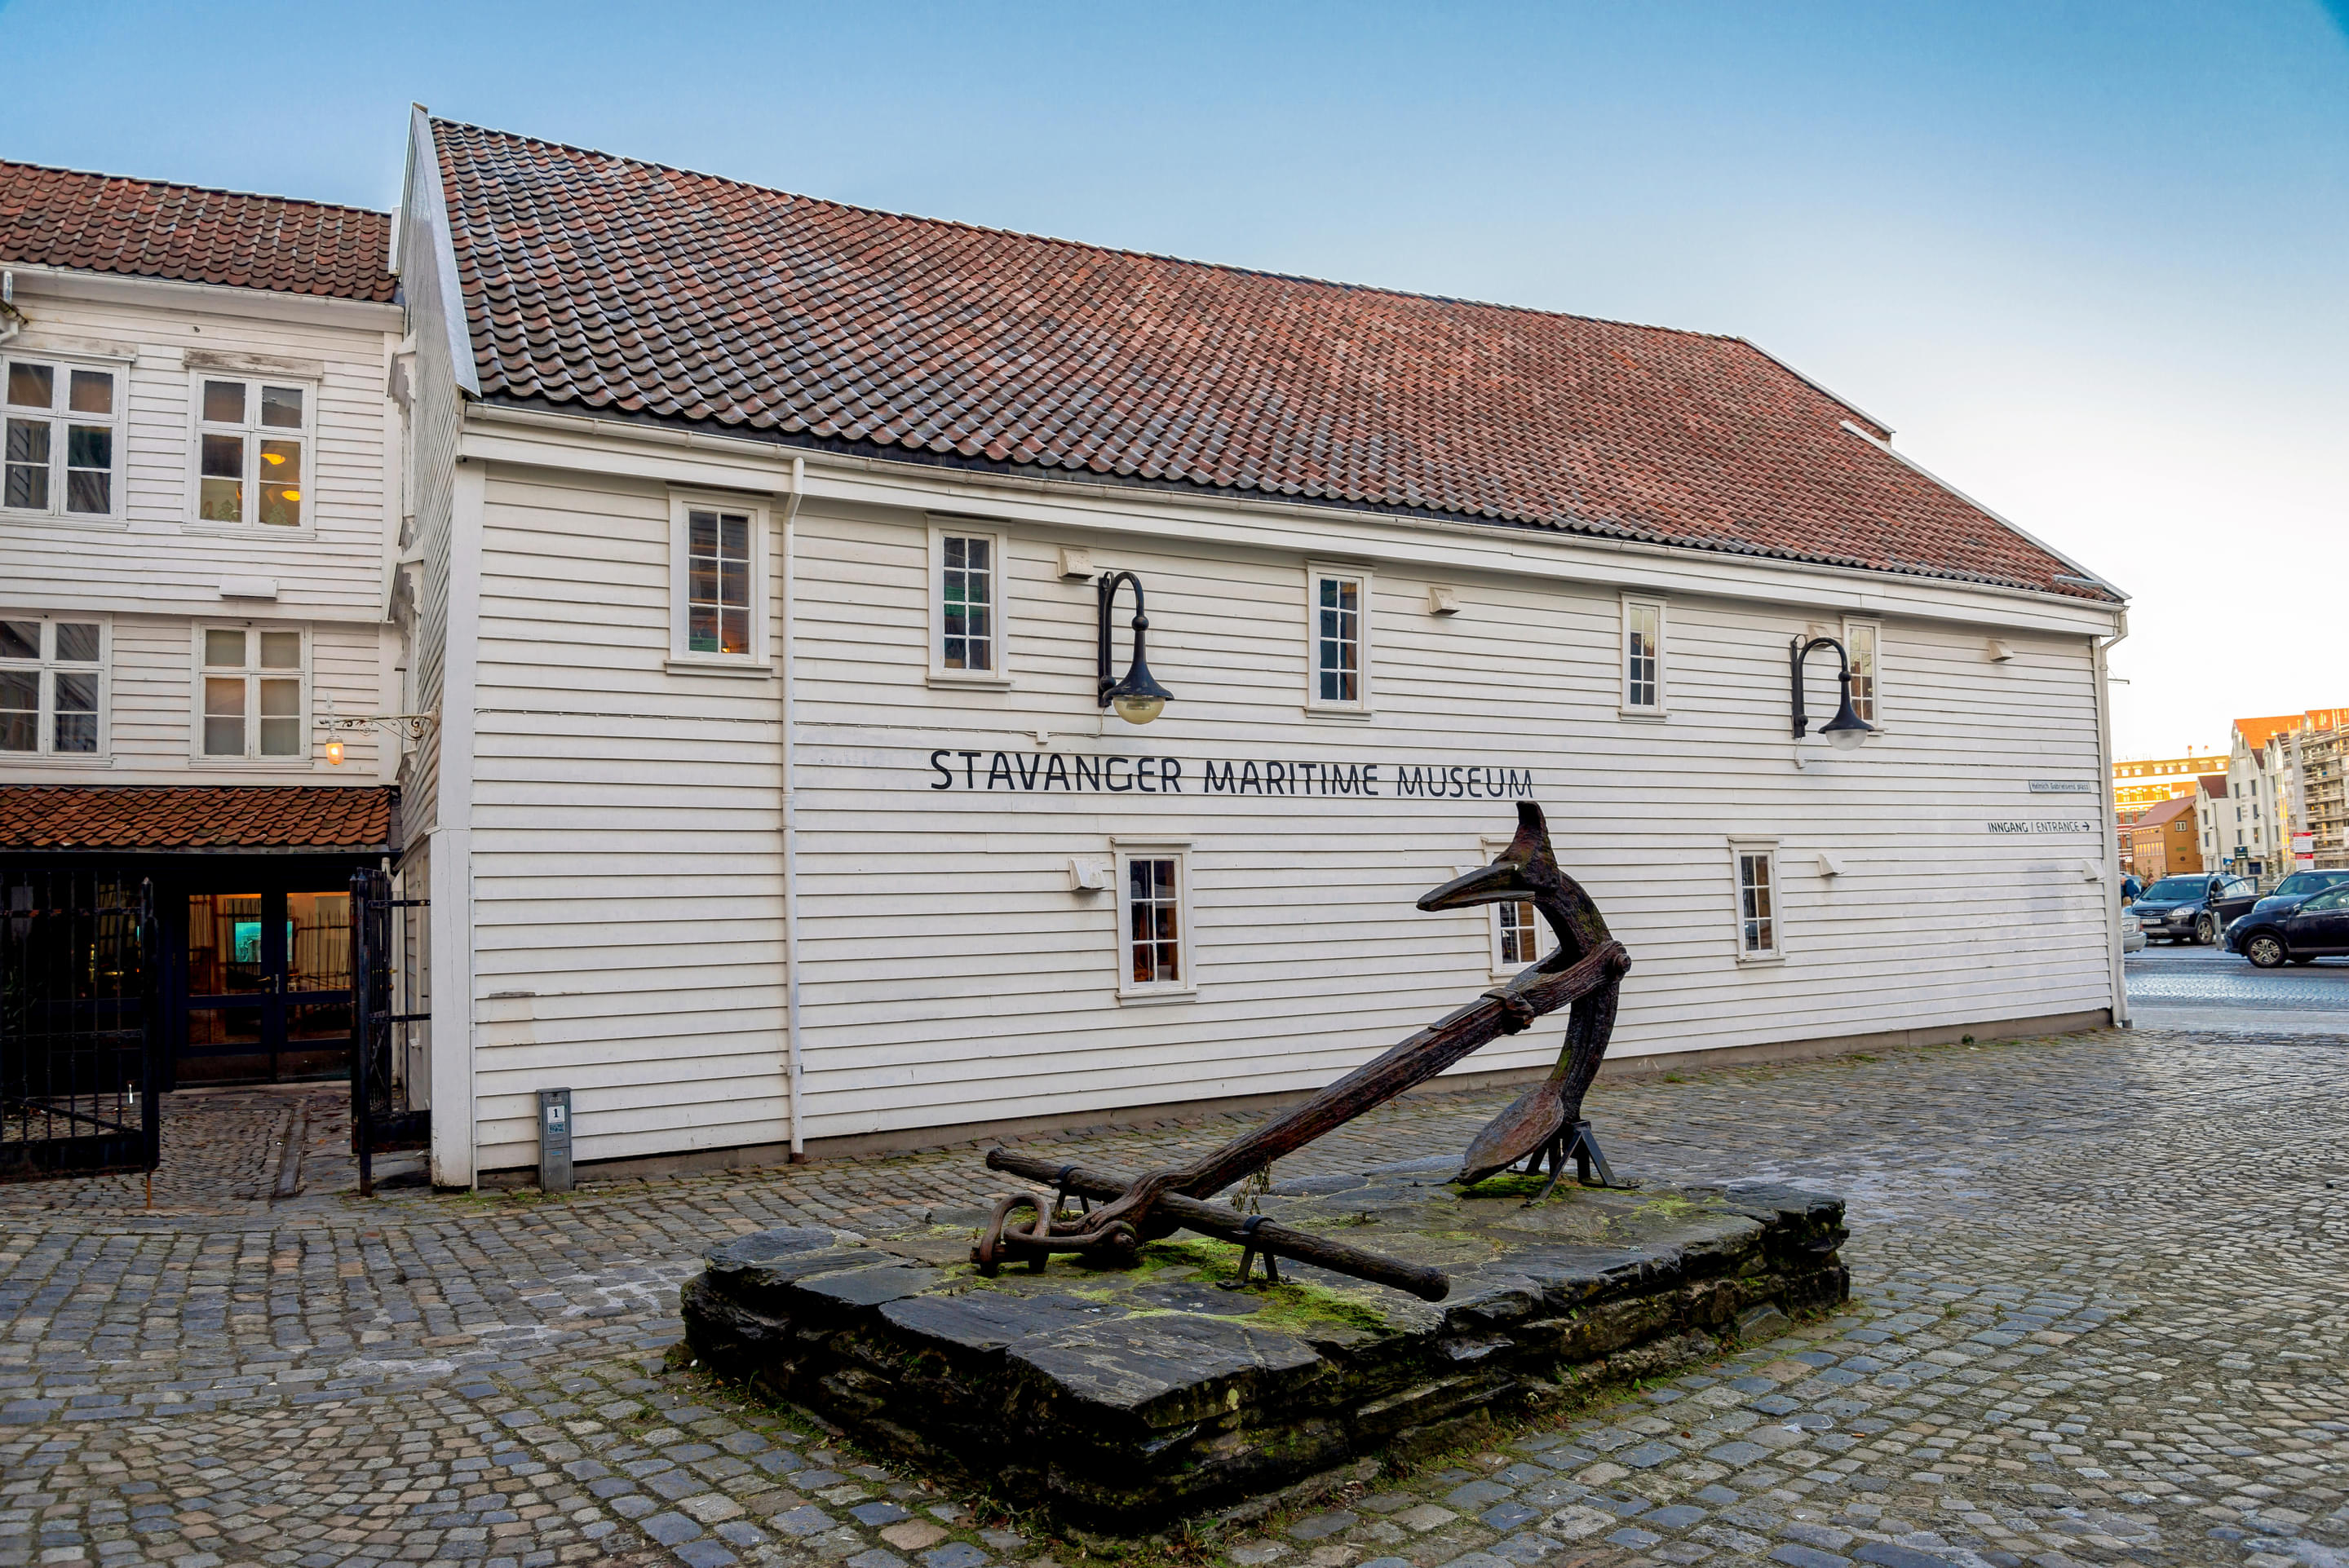 Stavanger Maritime Museum Overview